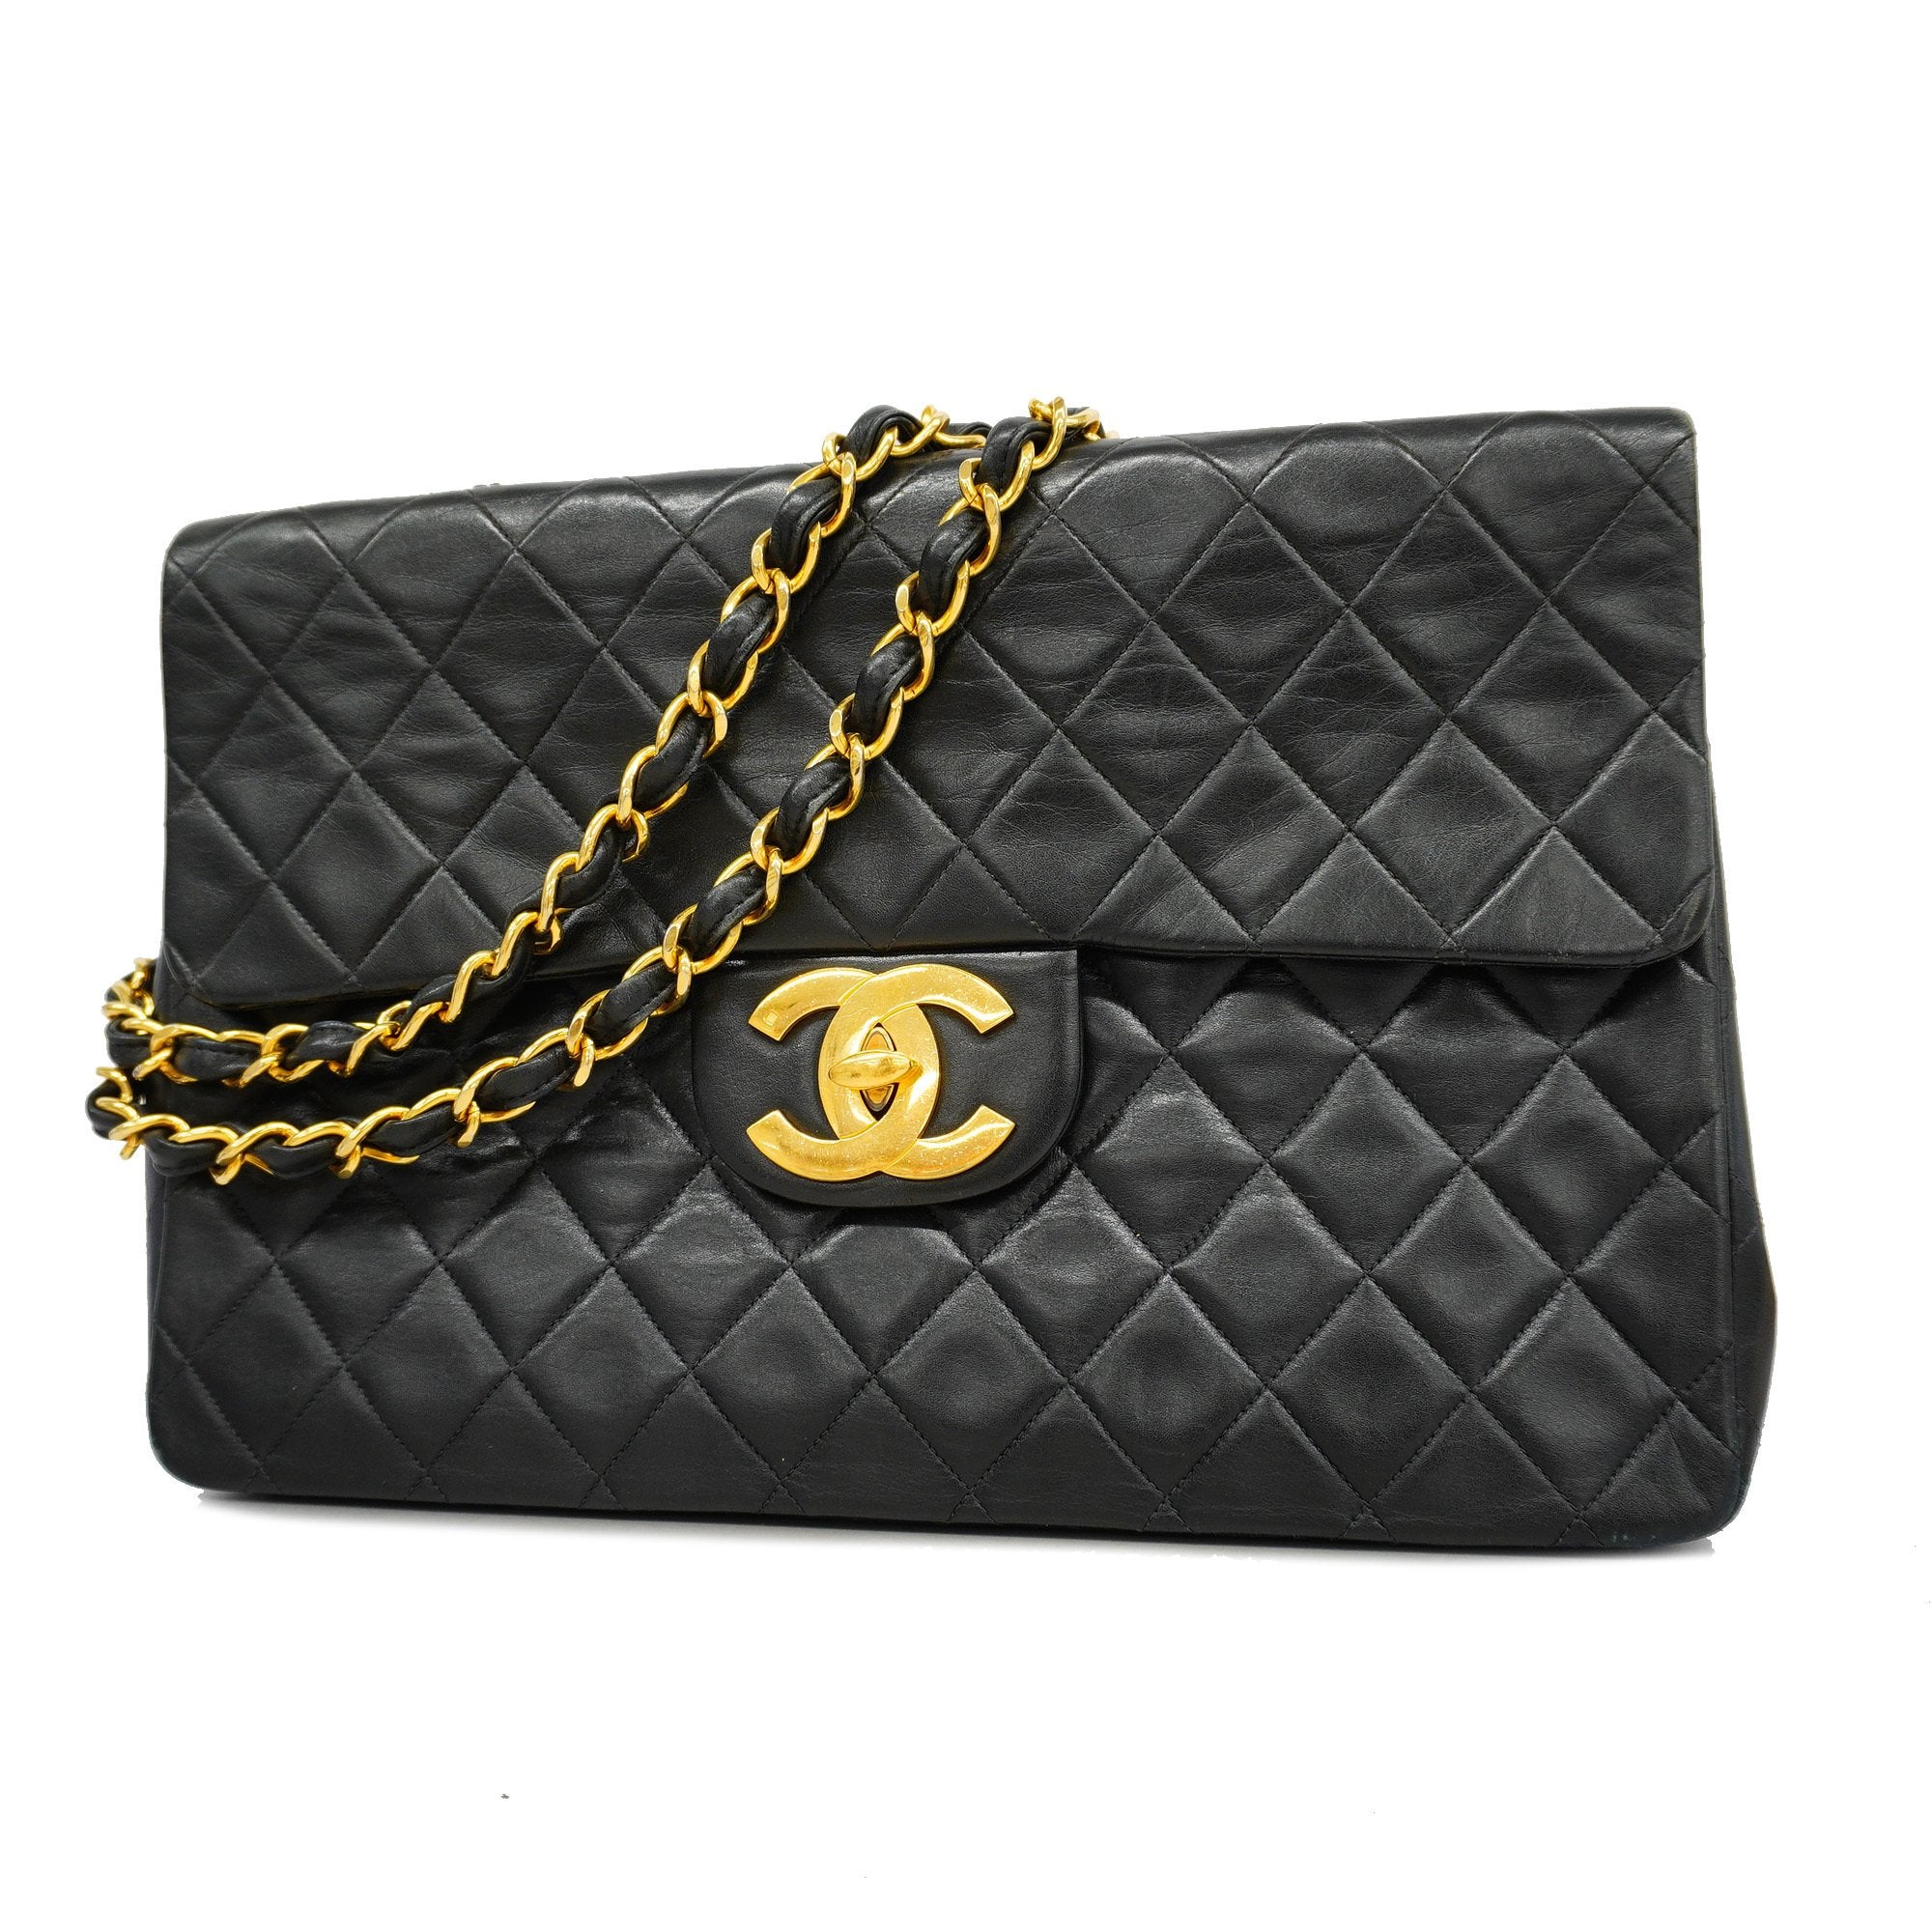 Chanel Lambskin large flap bag with matte gold hardware | eBay